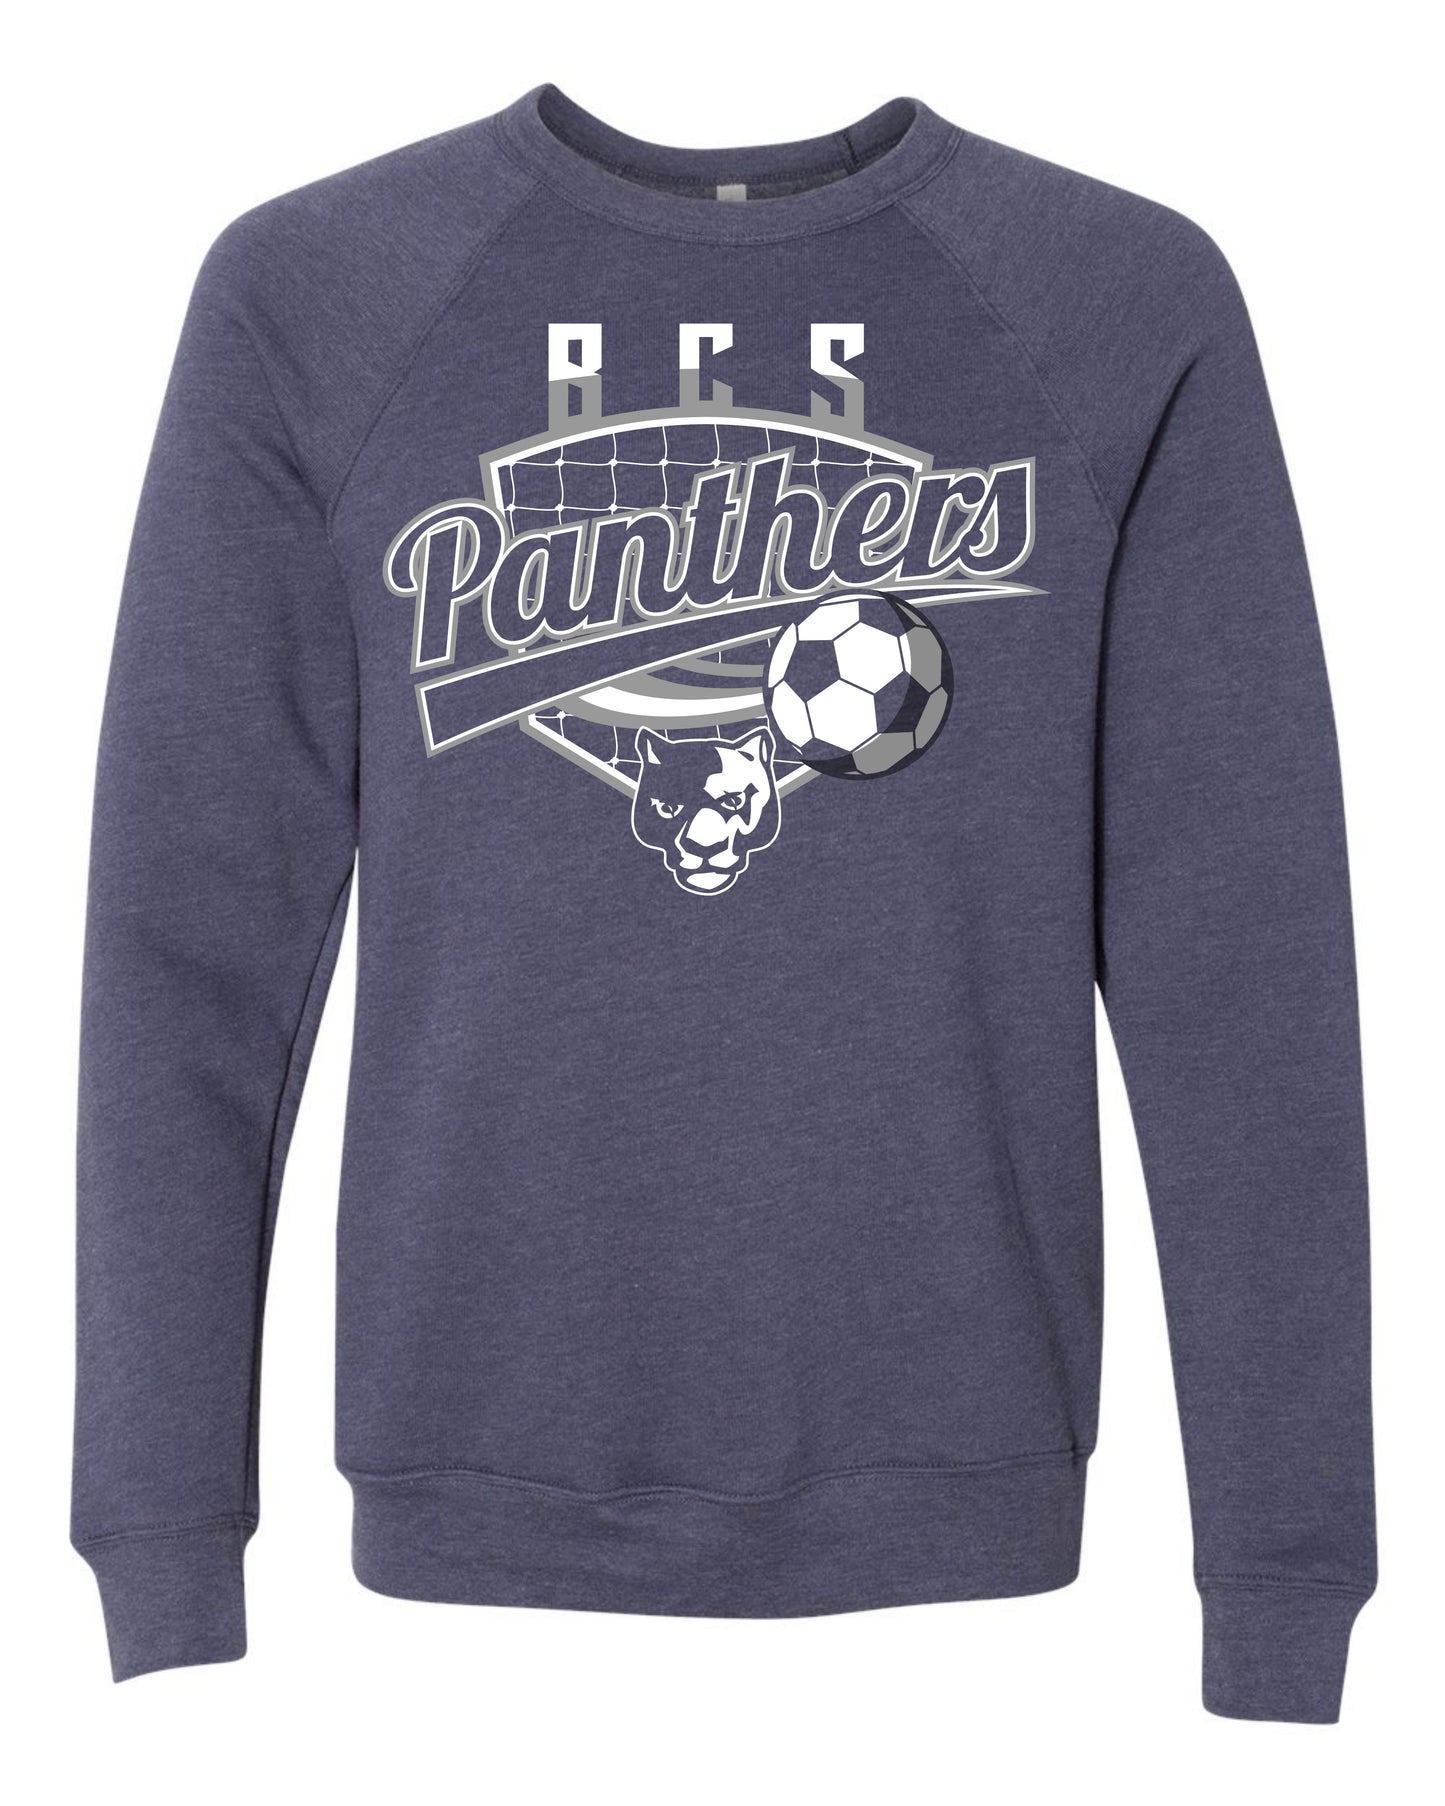 BCS Panthers Soccer Shield - Youth Sweatshirt